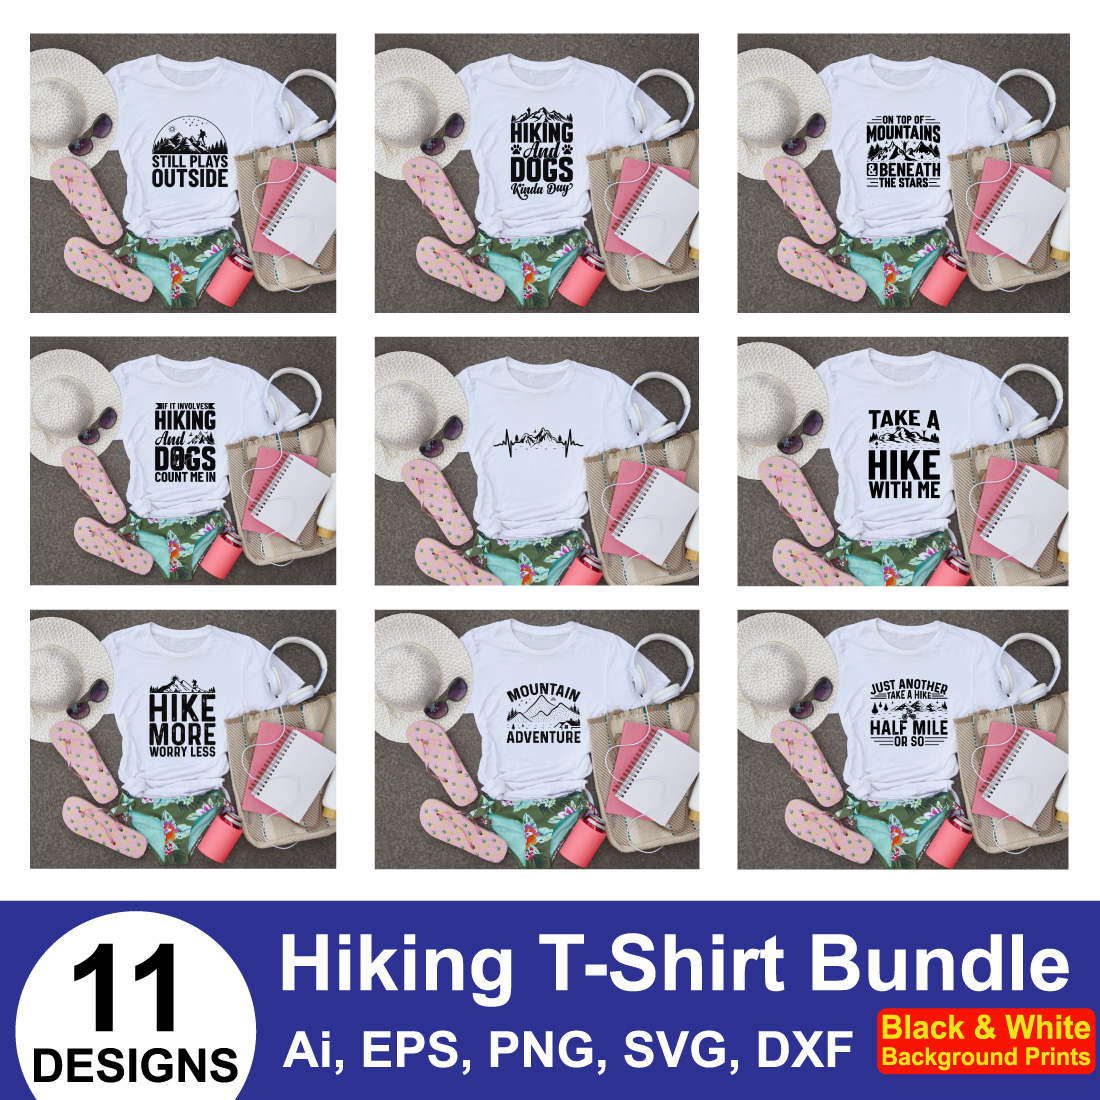 Hiking T-shirt Design Bundle cover image.